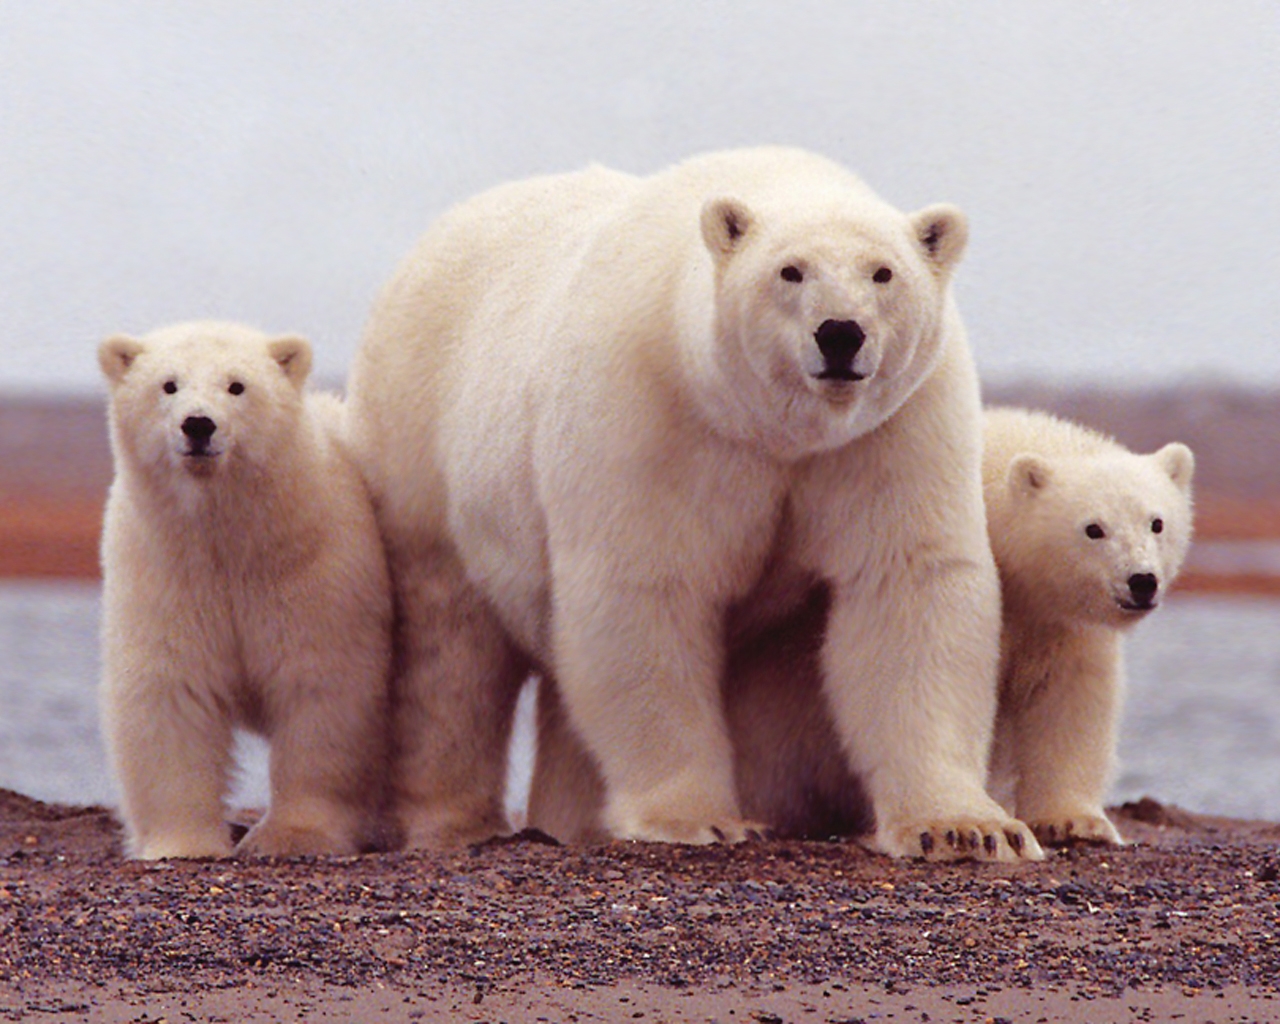 White Polar Bear computer desktop wallpaper (click to download wallpaper):